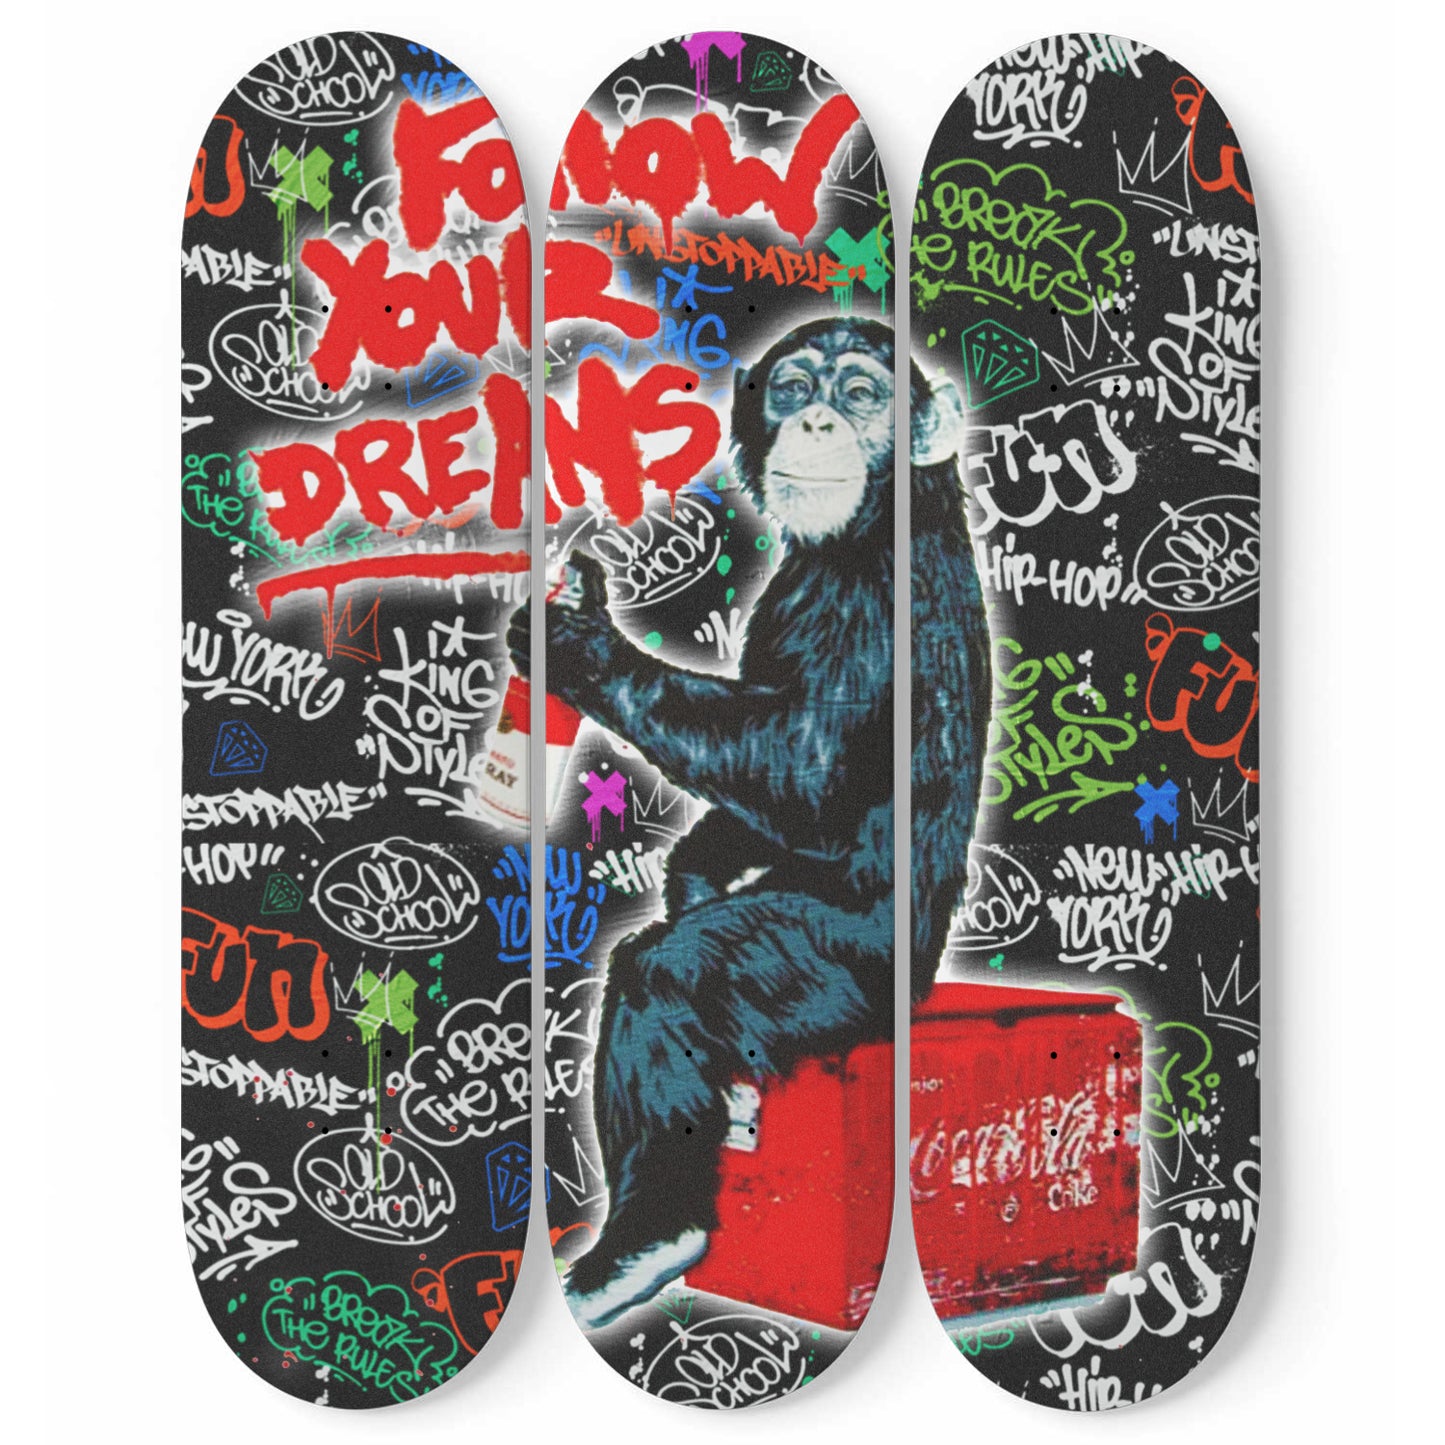 Banksy Follow Your Dreams Graffiti Skateboard Wall Art Gallery wrapped Maple Wood Ready To Hang